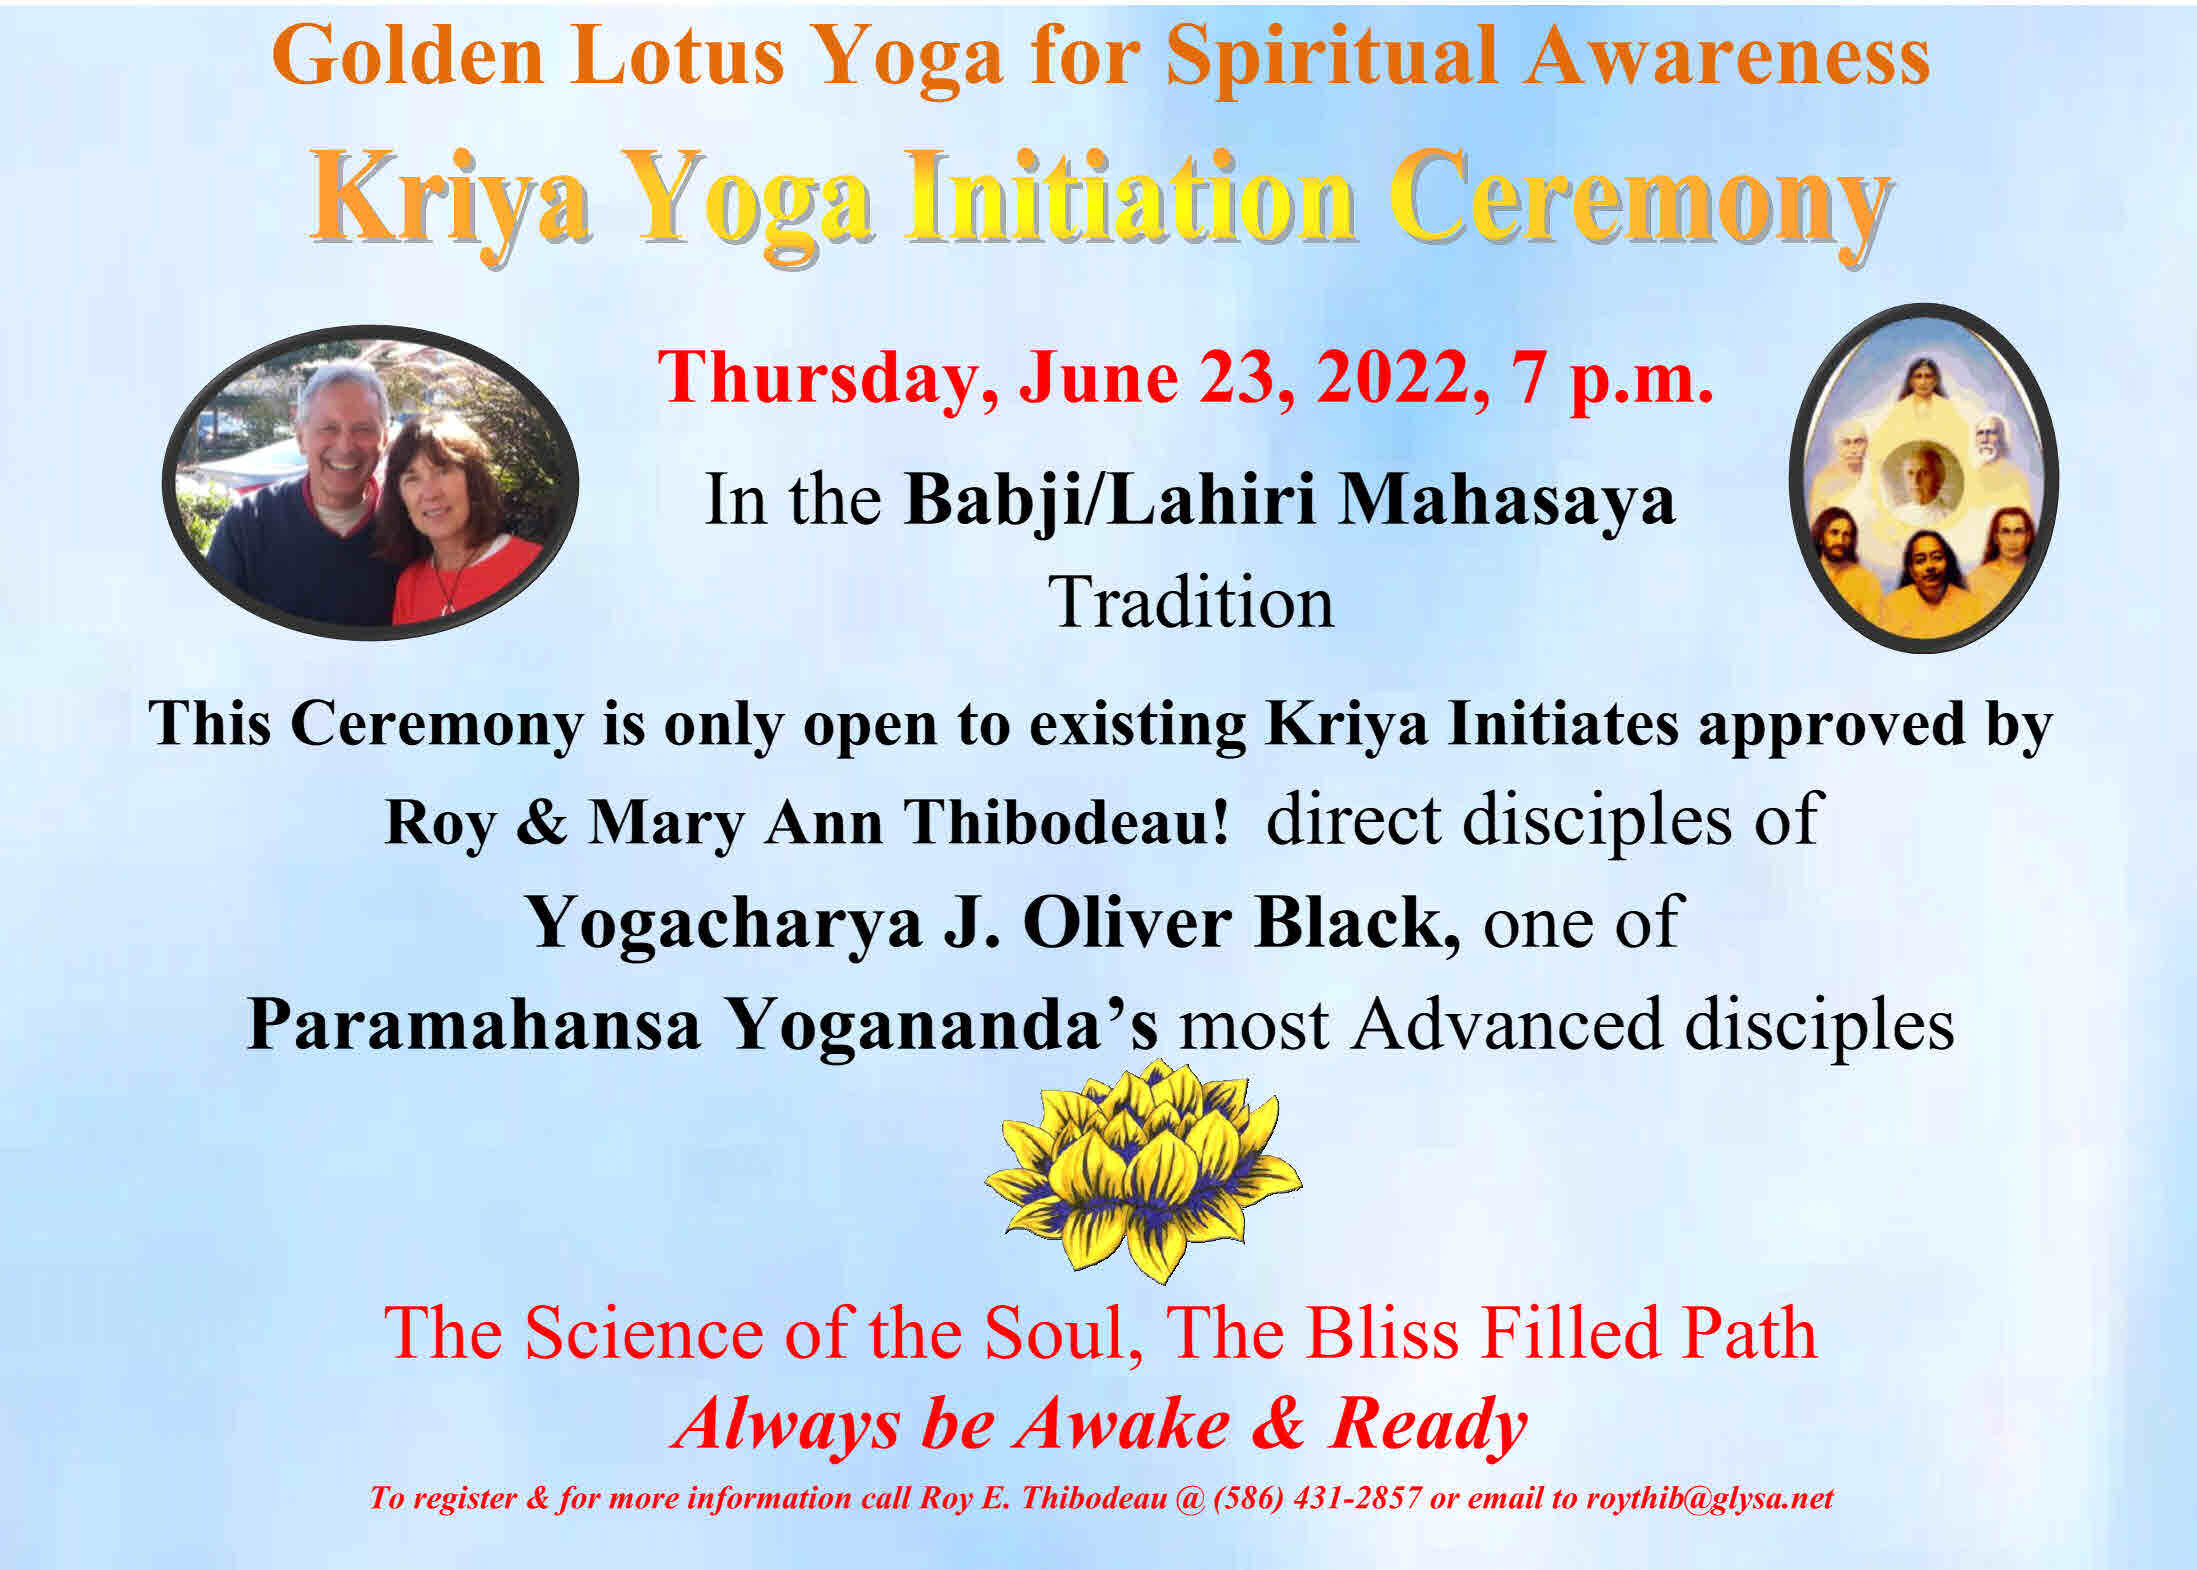 Kriya Yoga Initiation Ceremony – Golden Lotus Yoga for Spiritual Awareness